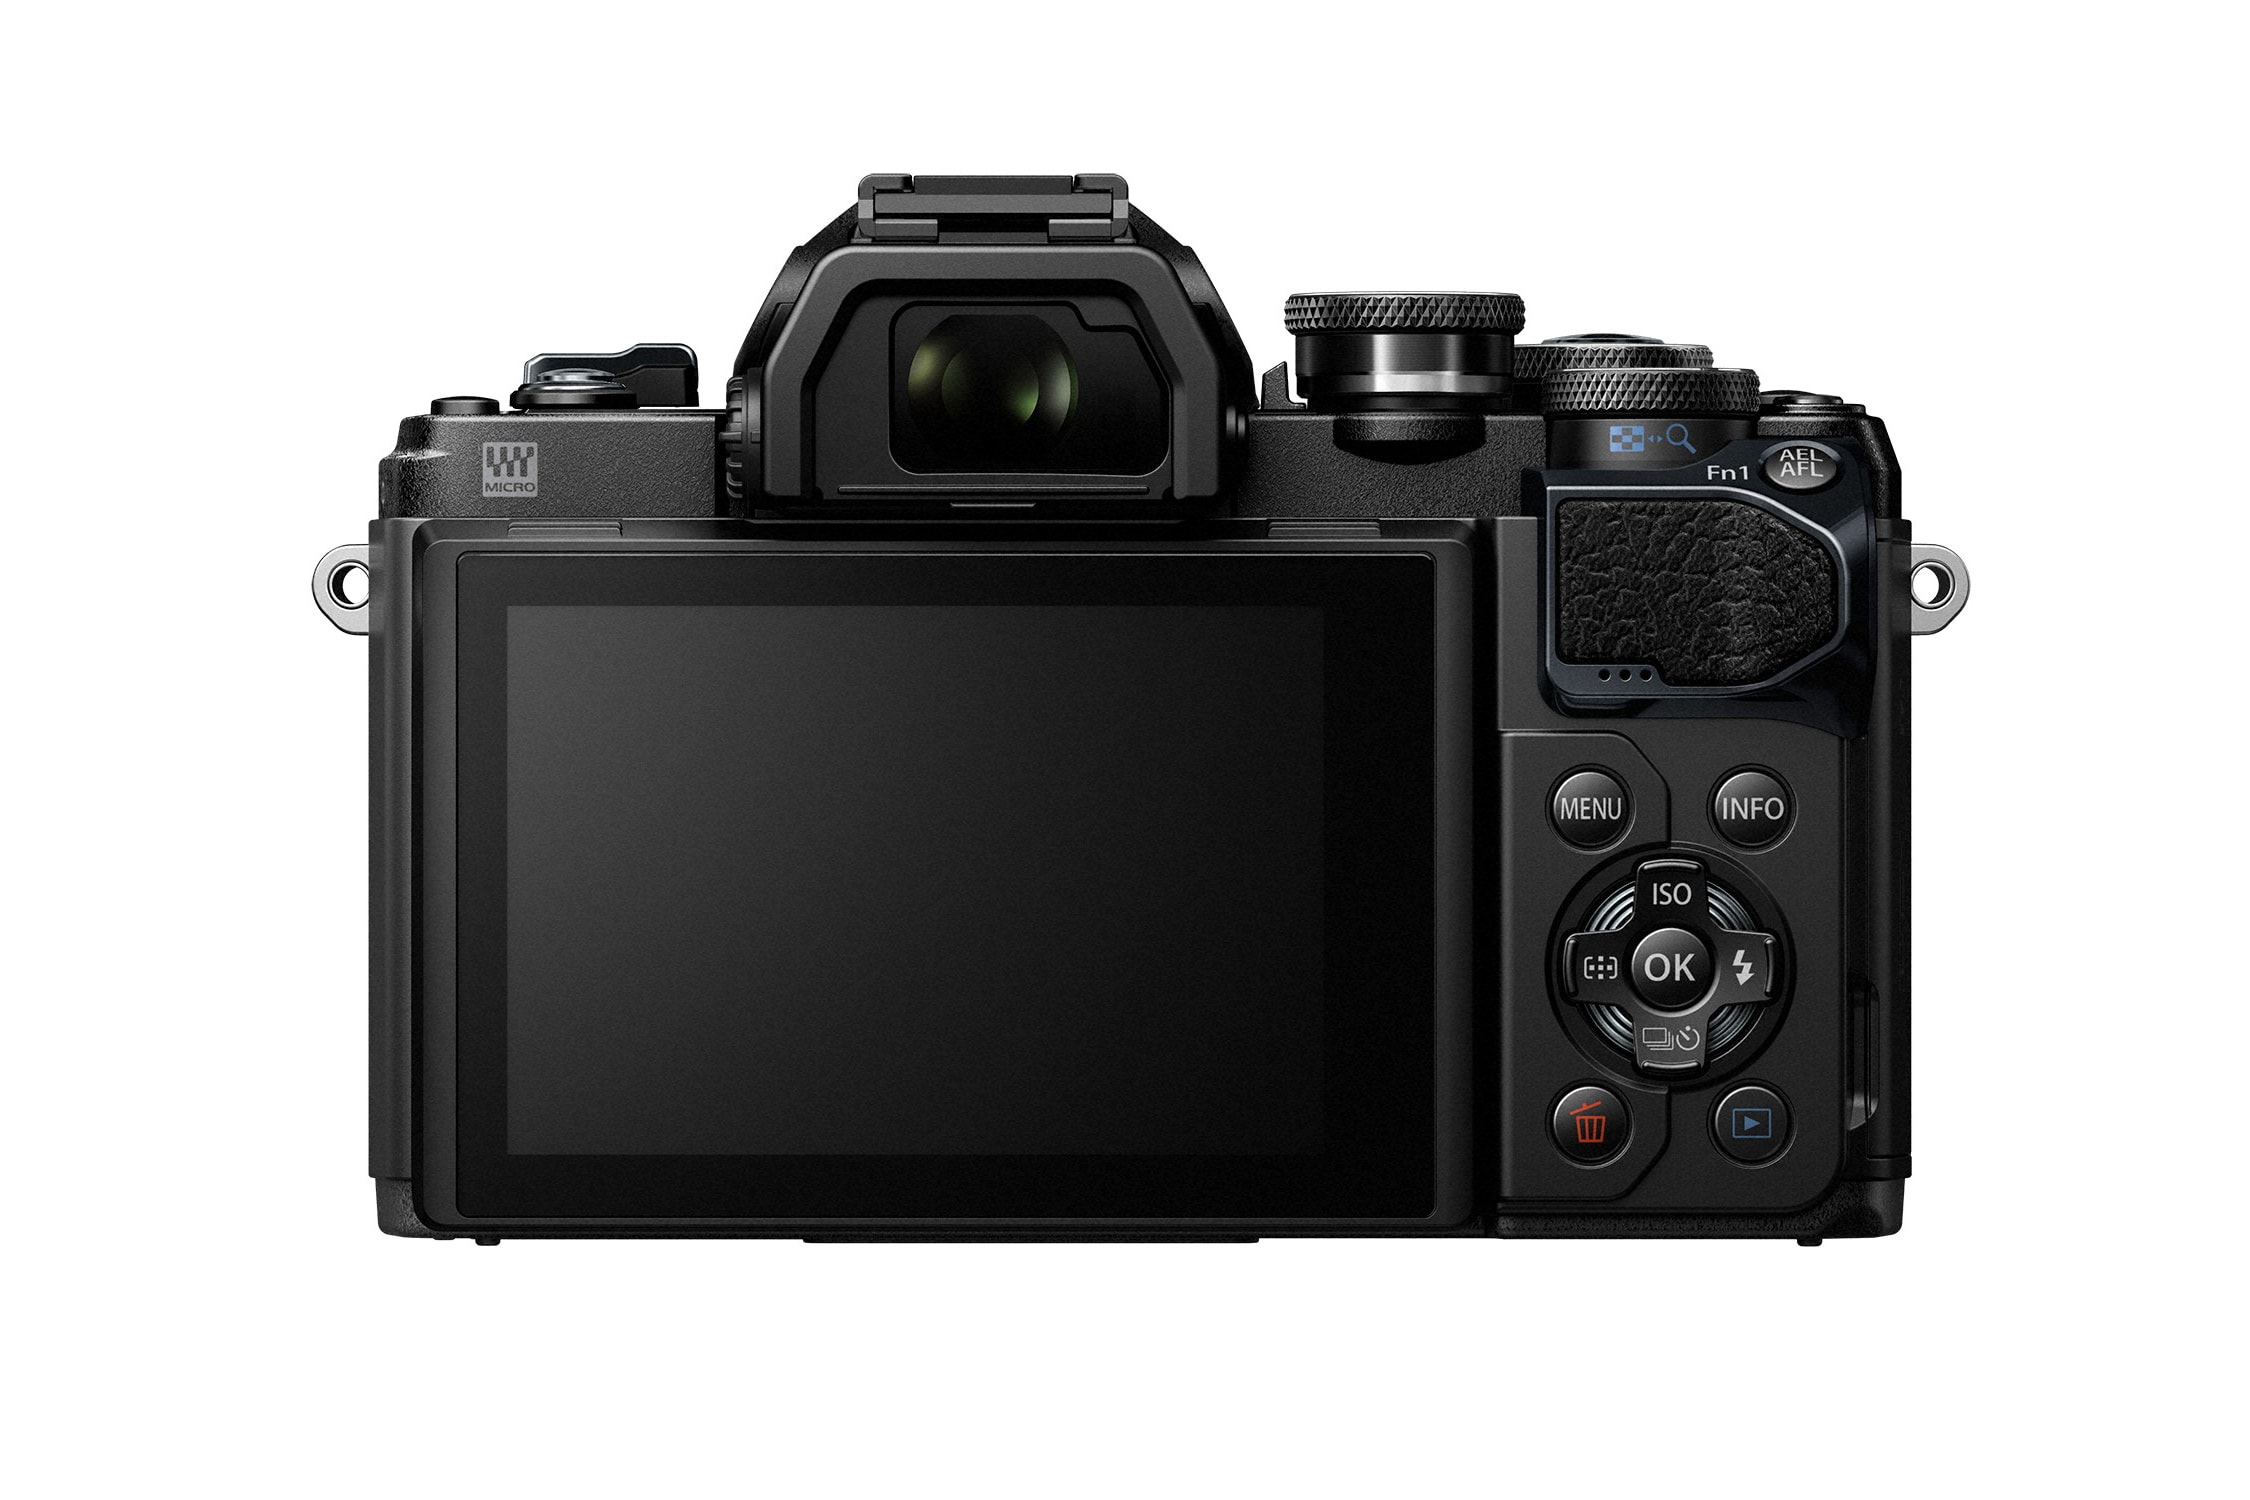 OLYMPUS 推出全新 OM-D E-M10 Mark III 相機